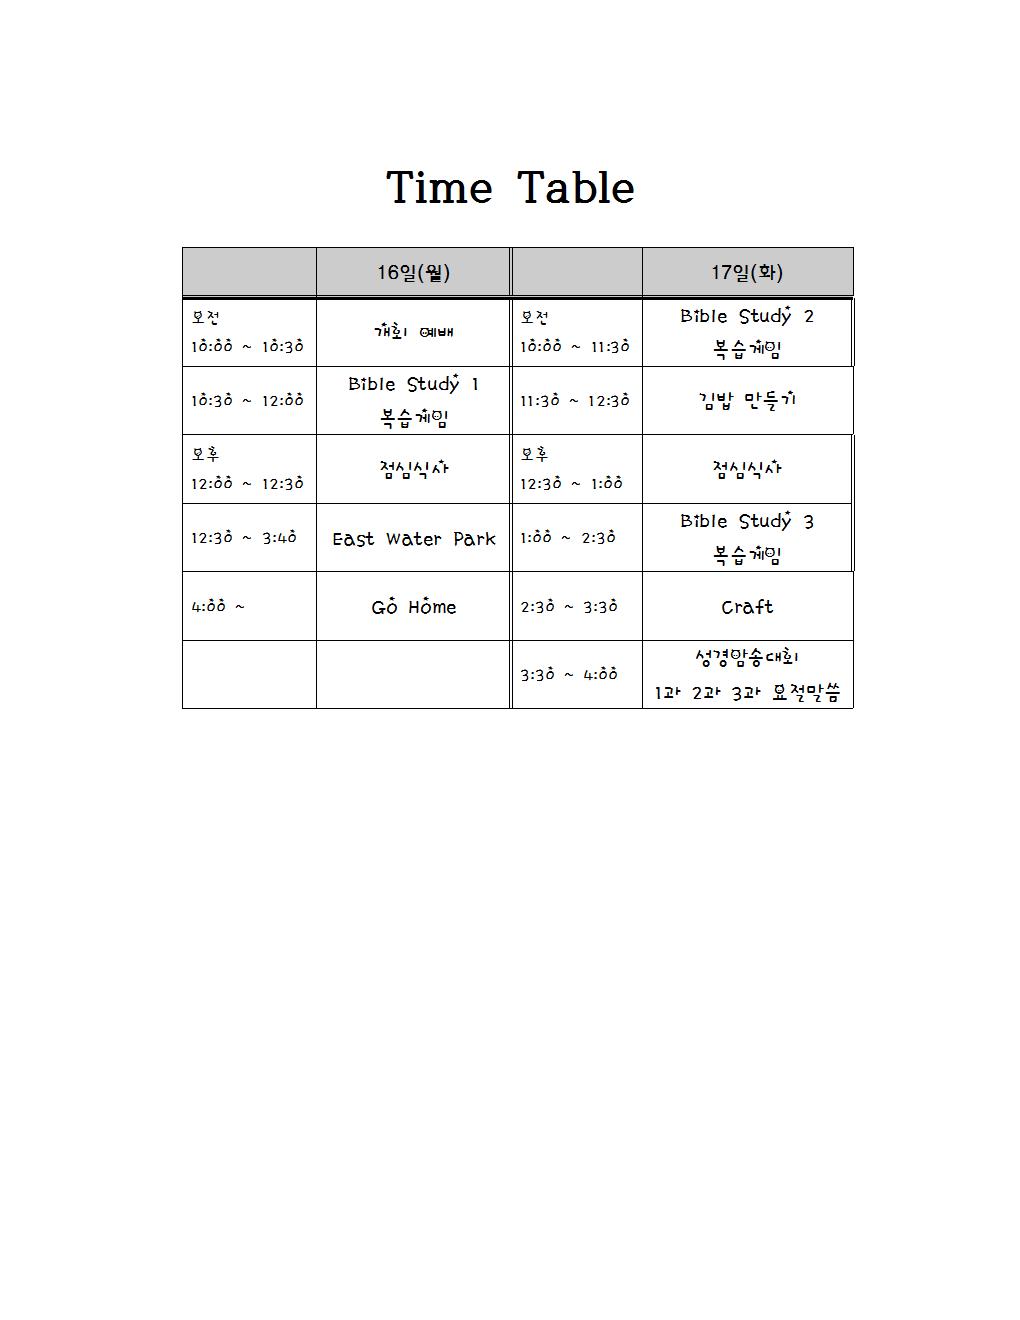 Time Table001.jpg